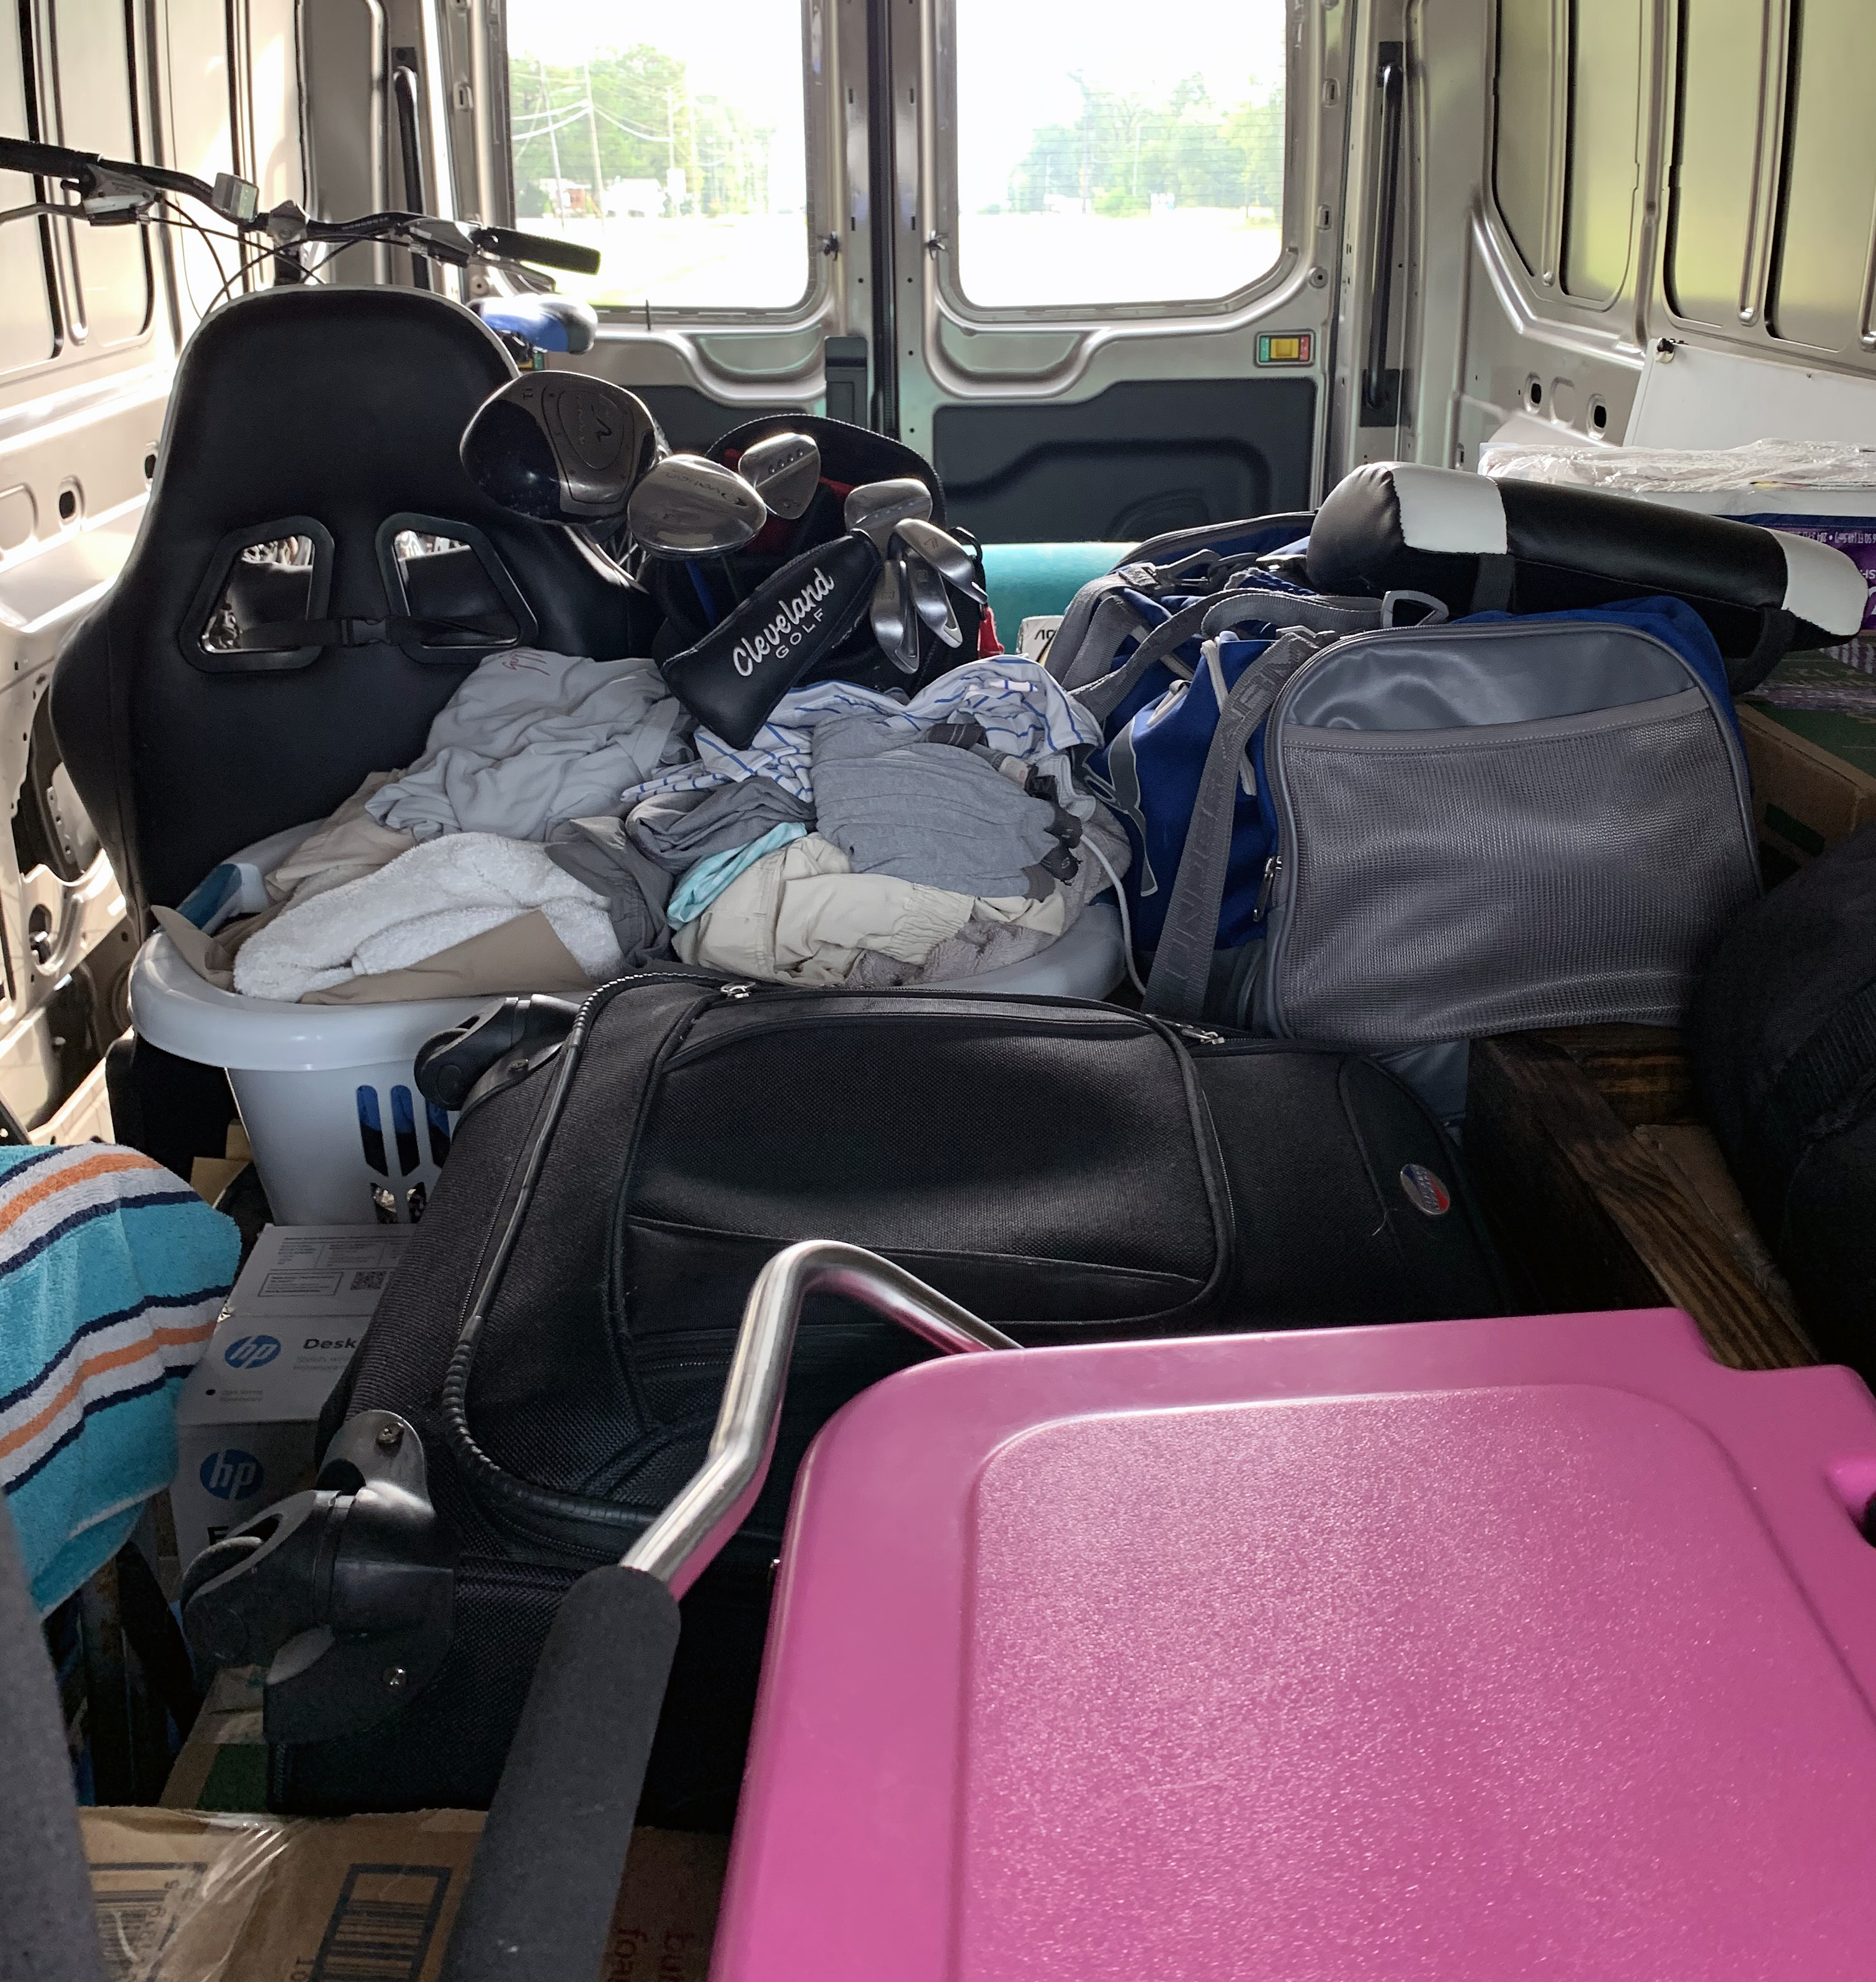 Inside 2020 Ford Transit 250 cargo van packed with belongings 